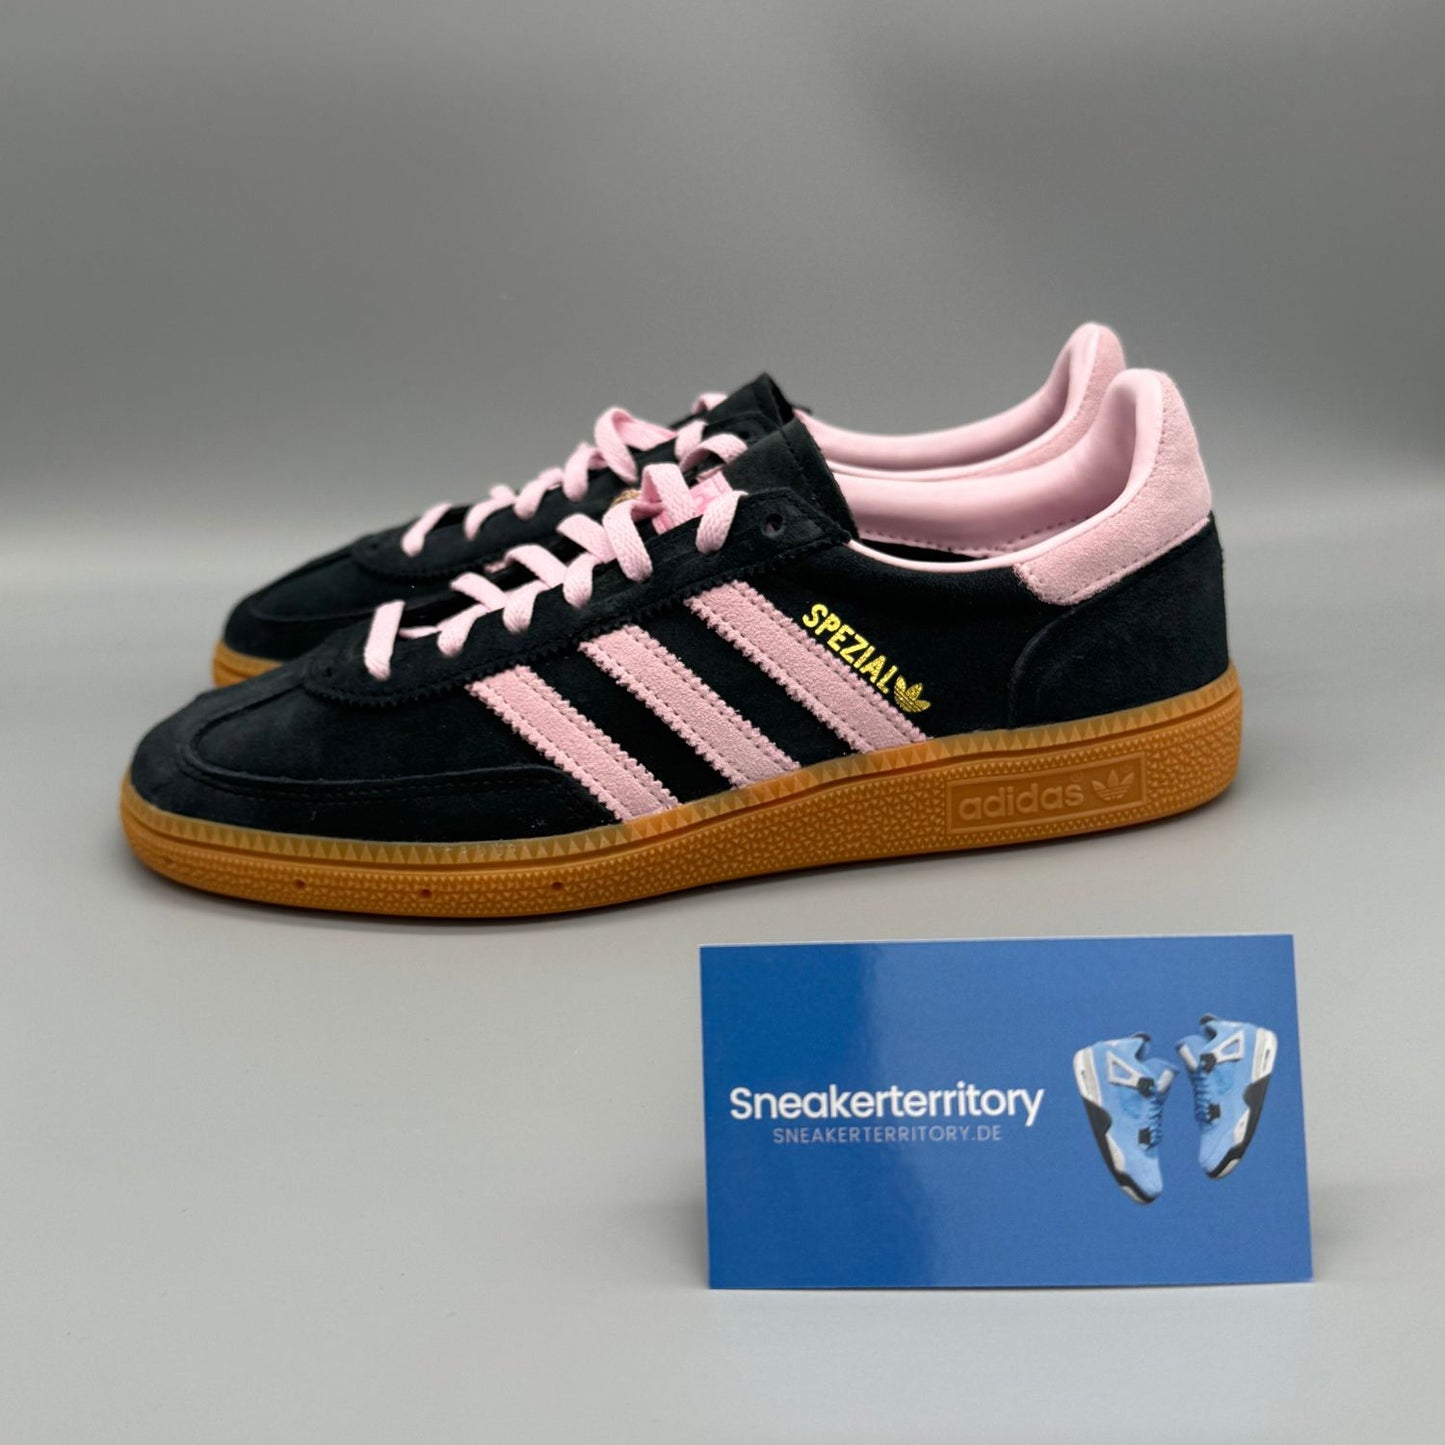 Adidas Handball Spezial Core Black Clear Pink Gum (W)- Sneakerterritory; Sneaker Territory; Handball Spezial Schwarz pink; Handball spezial pink